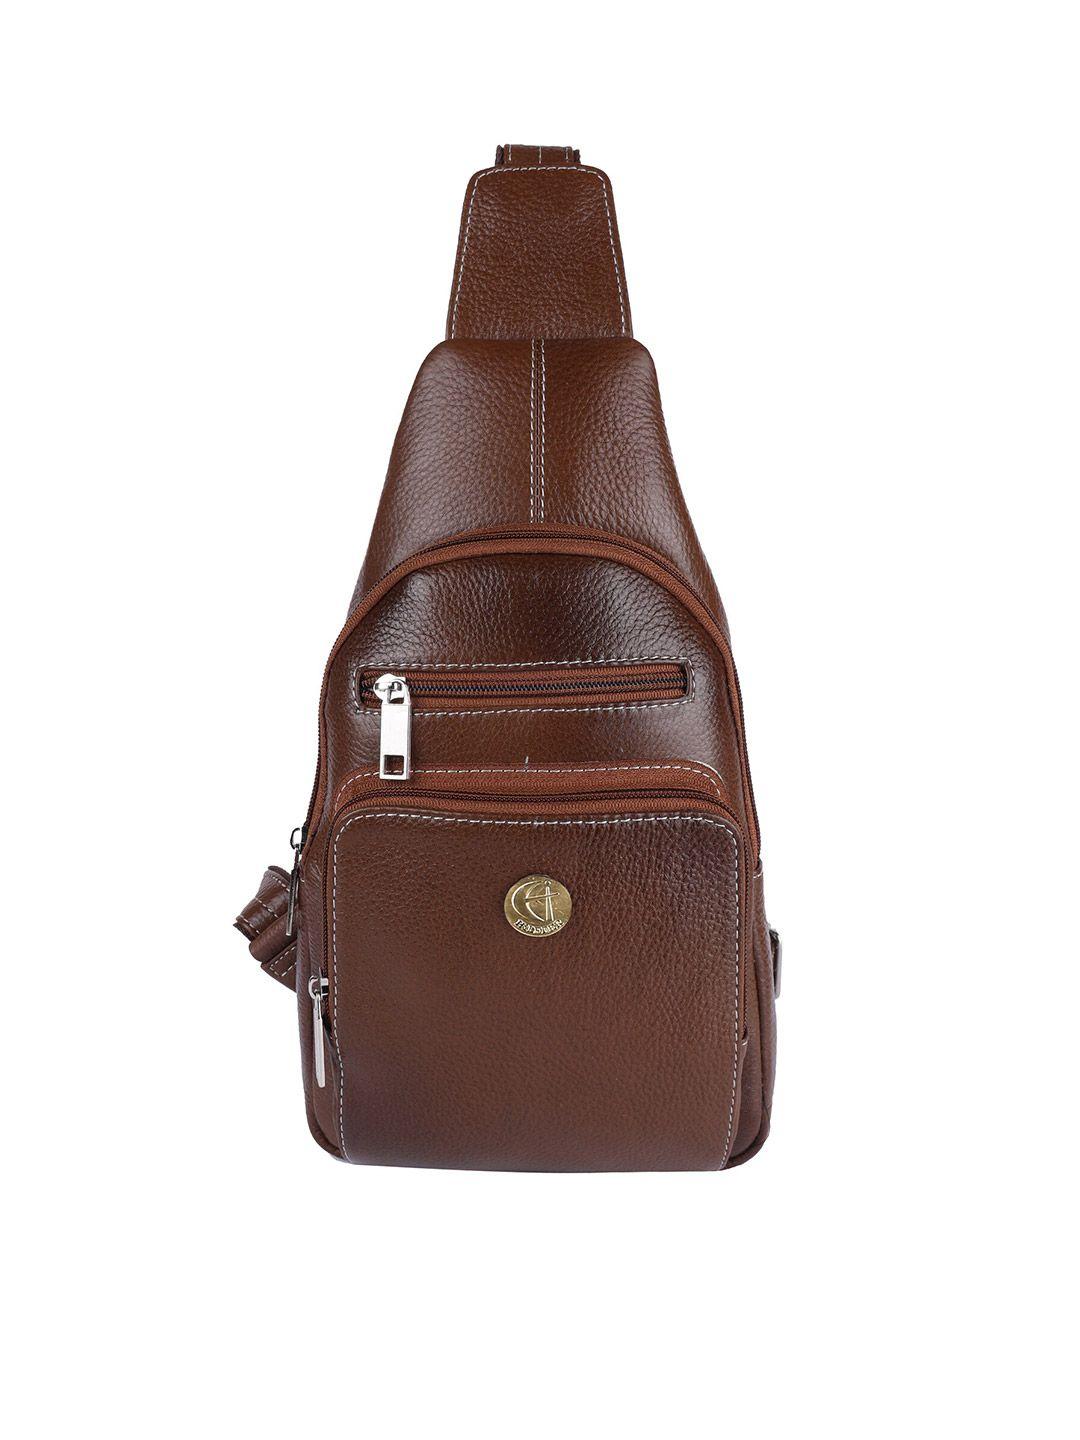 hileder unisex coffee leather backpack